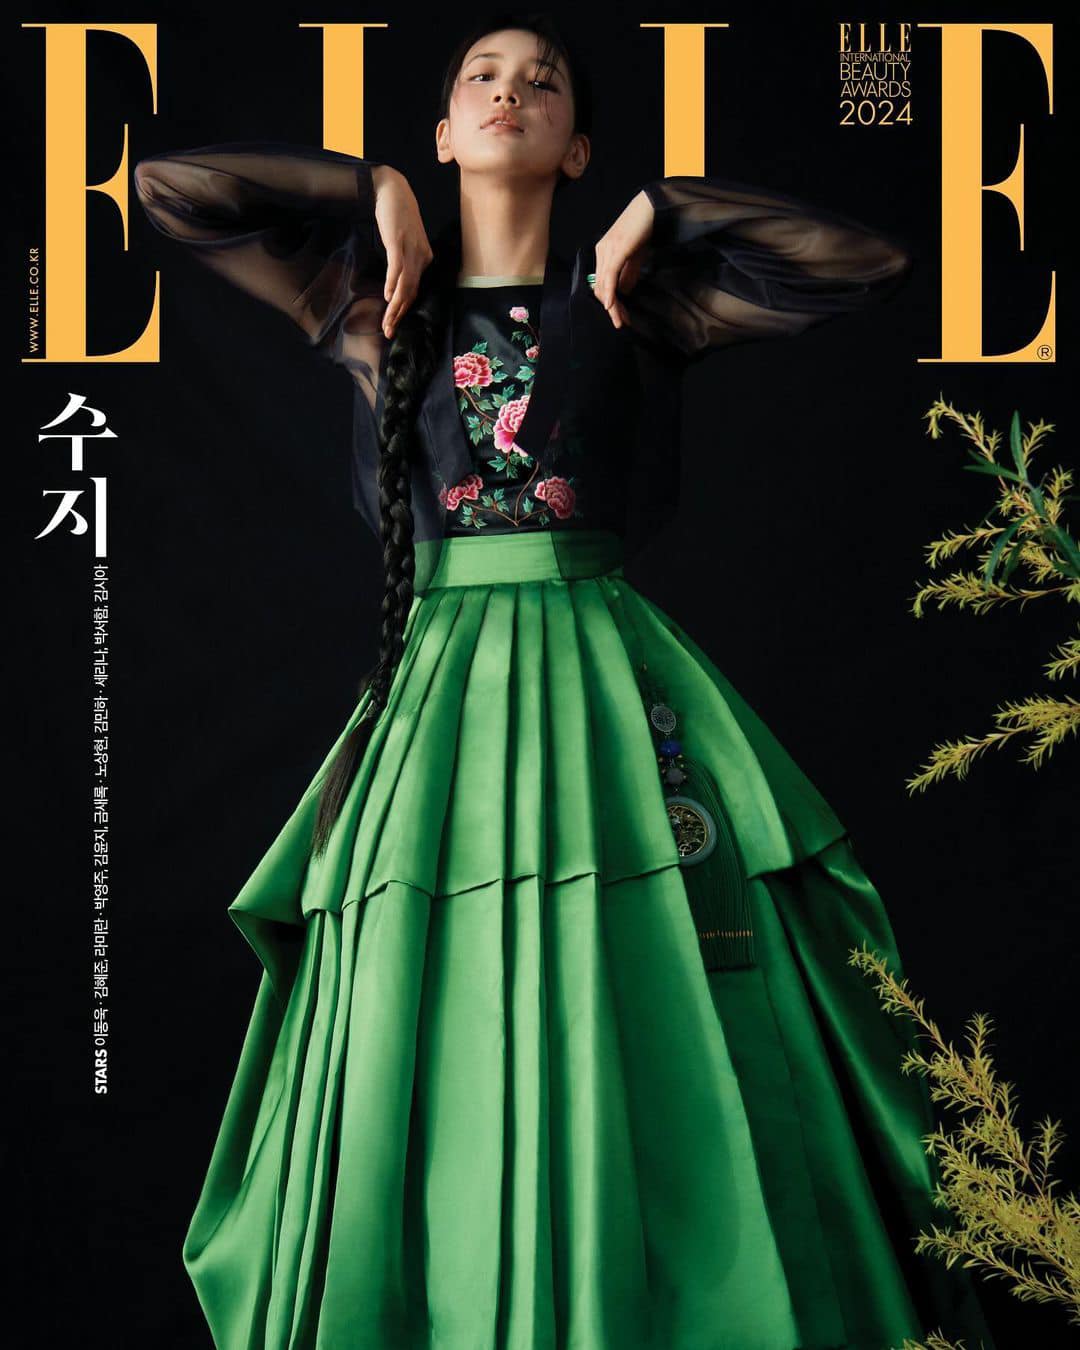 Bộ ảnh Hanbok của Suzy với Elle Korea có 12 trang bìa. Ảnh: Elle